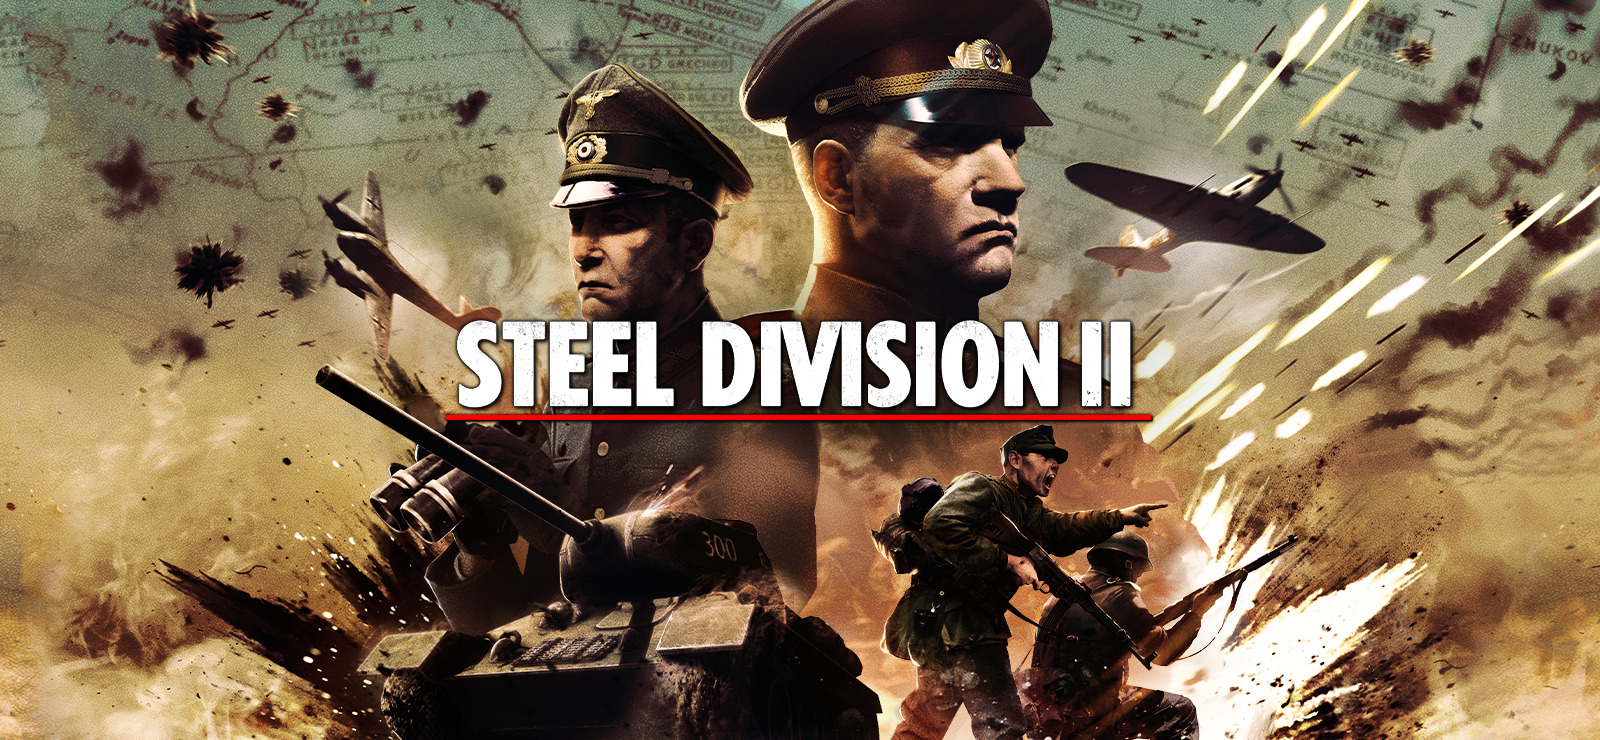 Steel Division 2 1 - سی دی کی اورجینال Steel Division 2